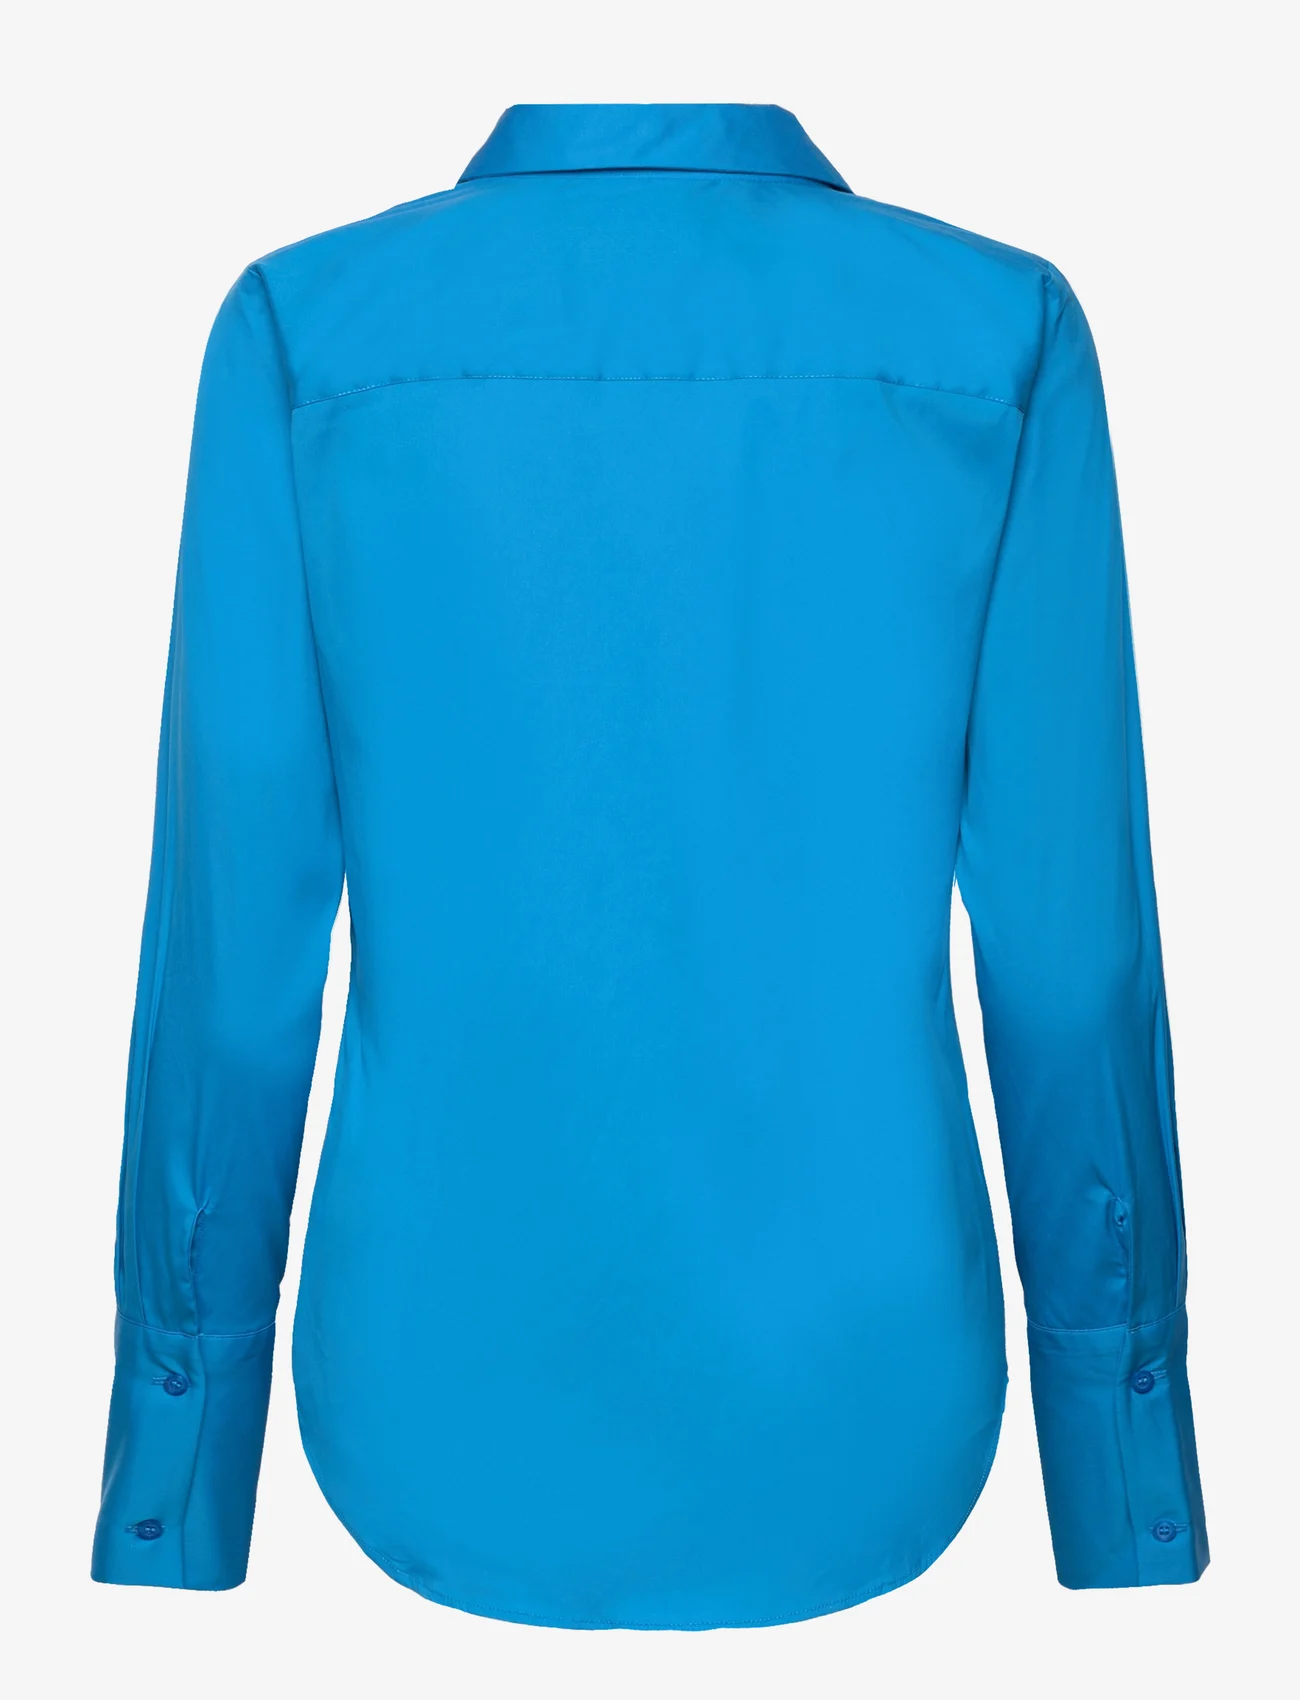 MOS MOSH - Sybel LS Shirt - long-sleeved shirts - blue aster - 1